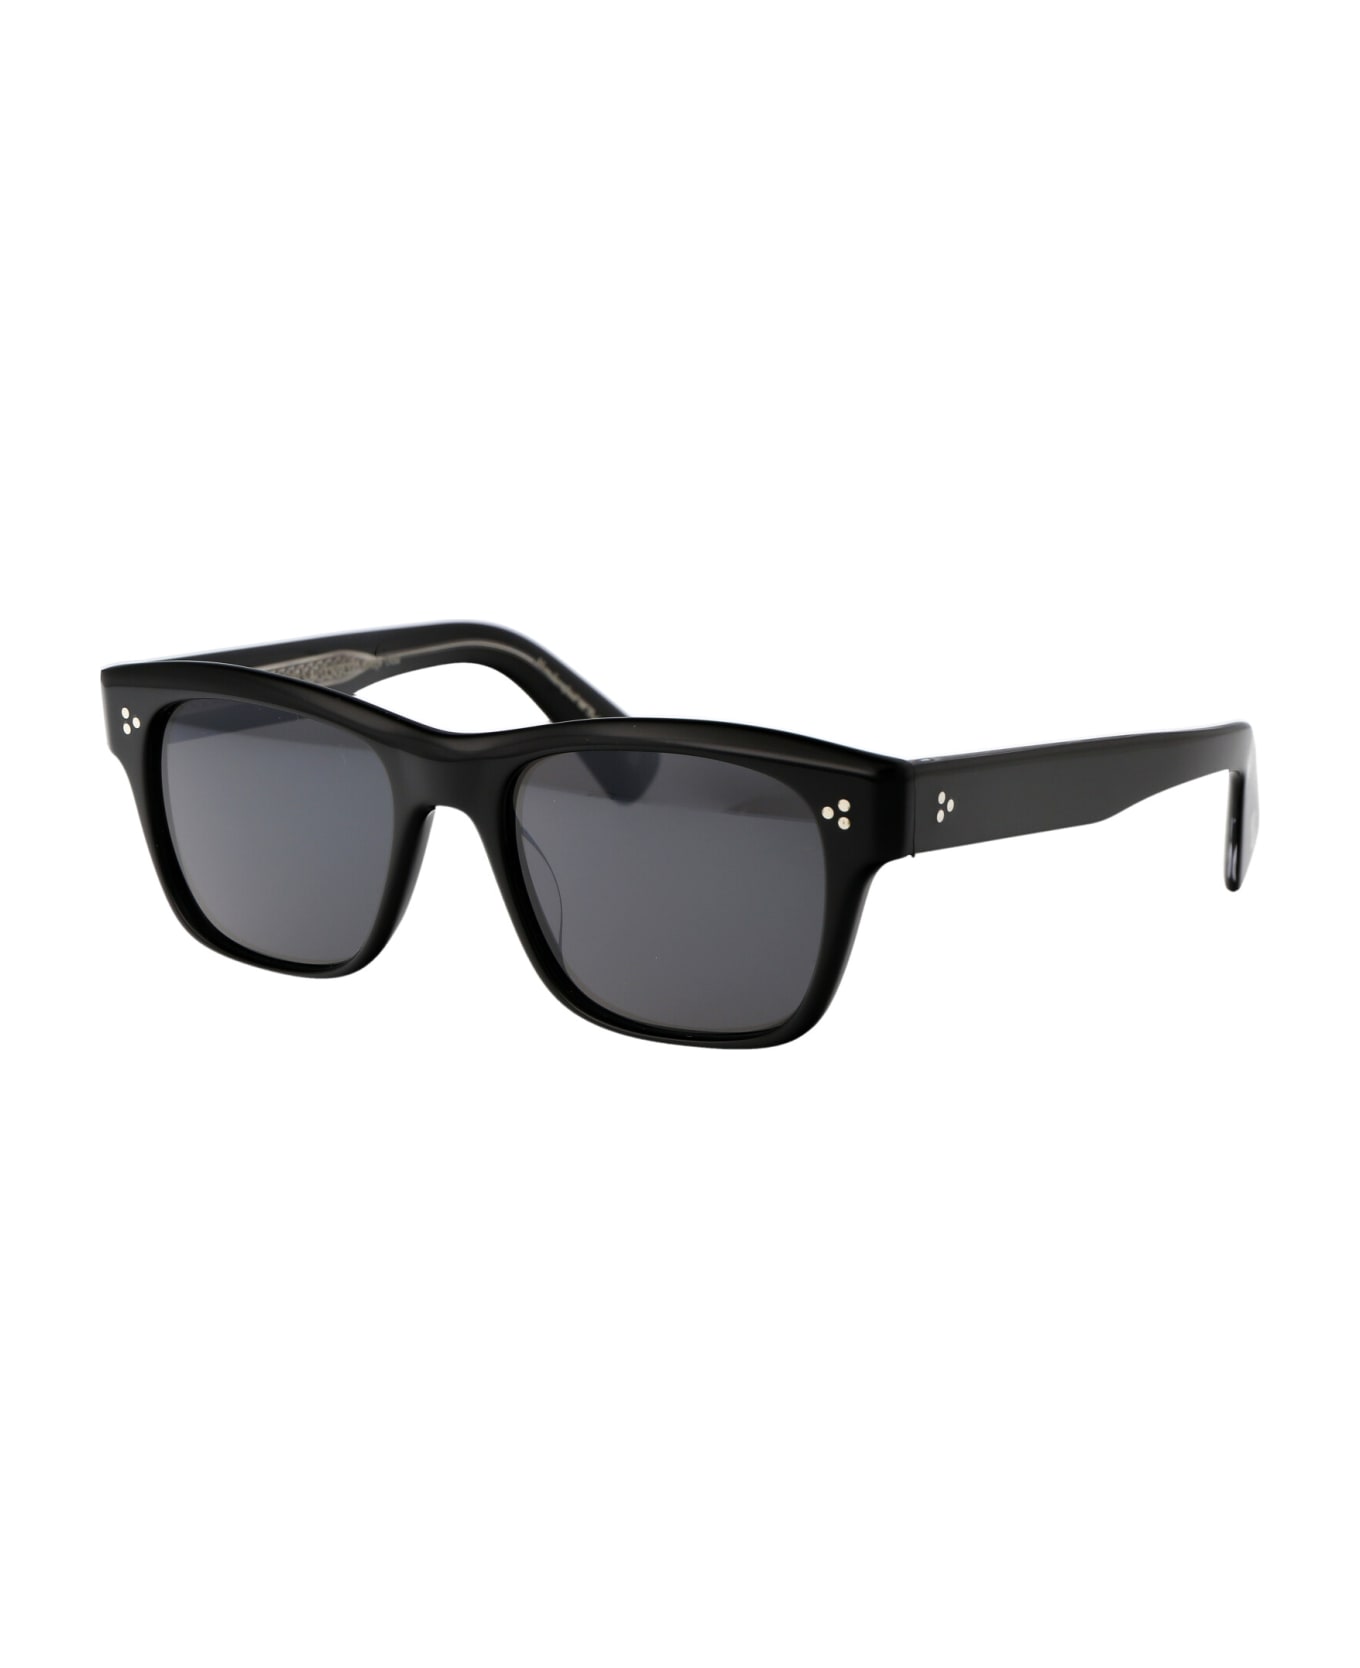 Oliver Peoples Birell Sun Sunglasses - 1492R5 Black